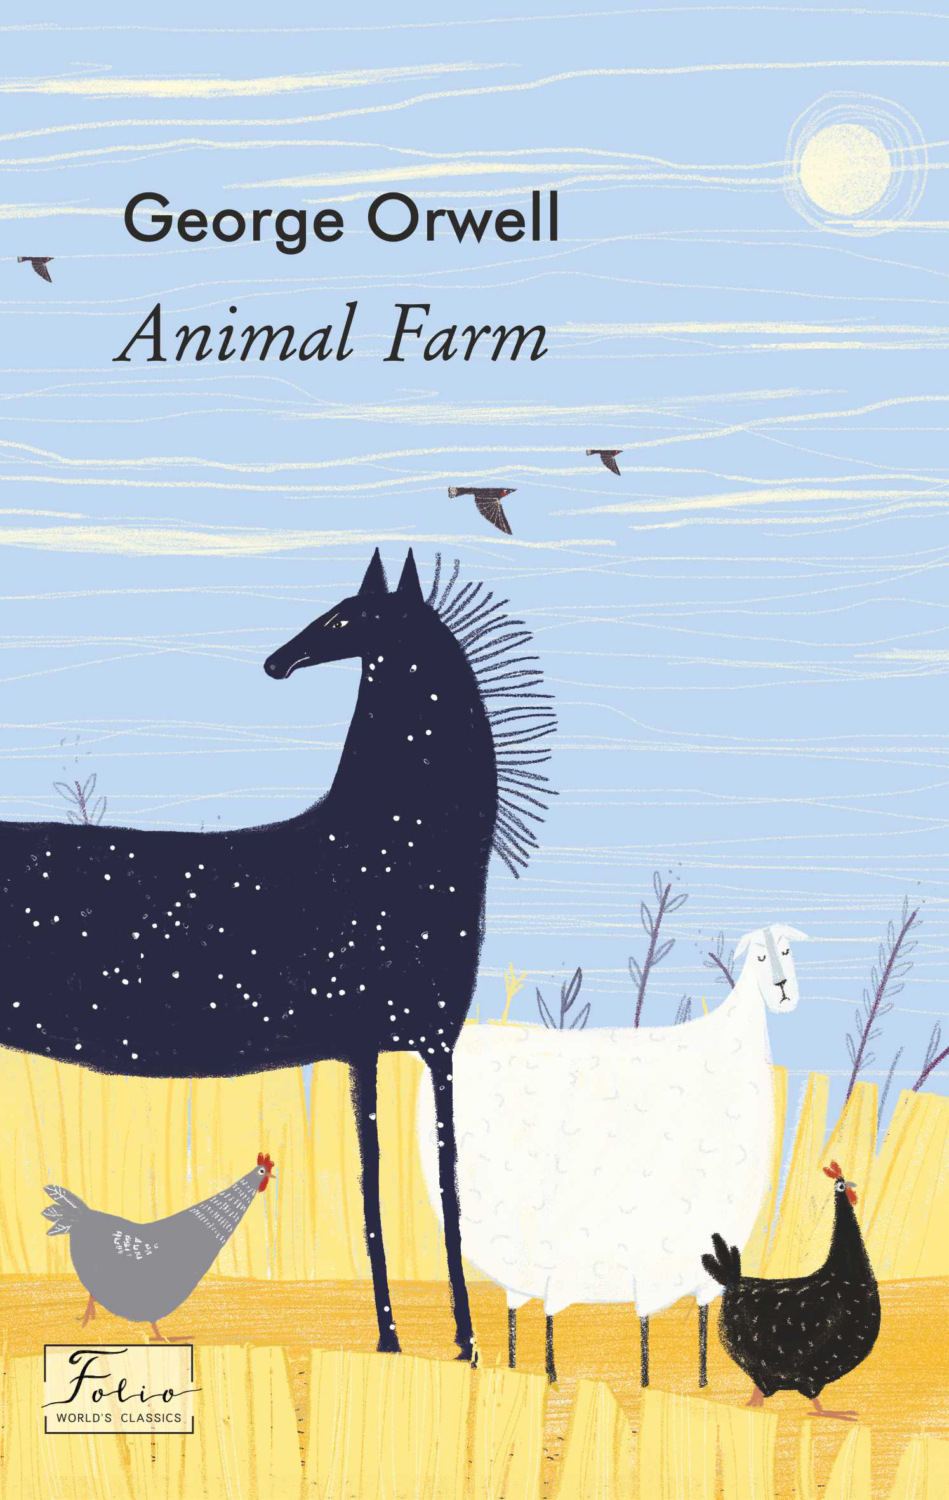 George Orwell, Animal Farm – download epub, mobi, pdf at Litres